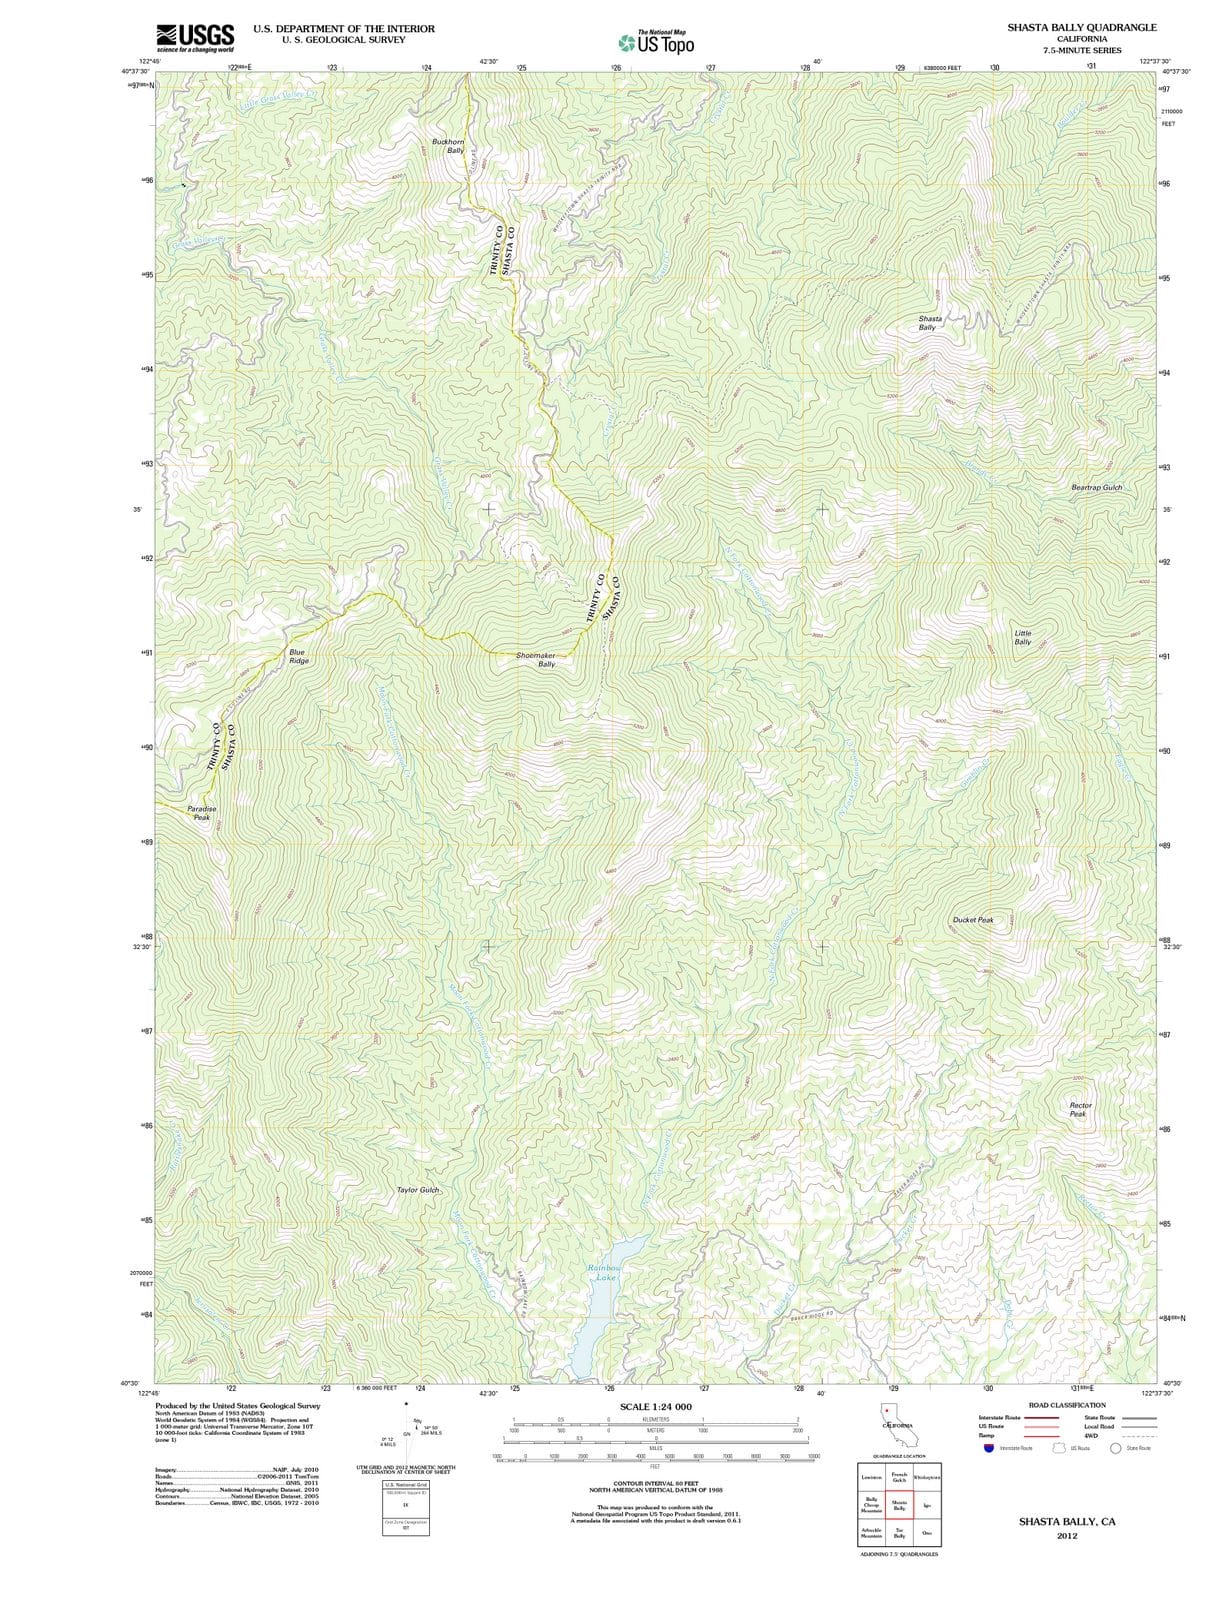 2012 Shasta Bally, CA - California - USGS Topographic Map